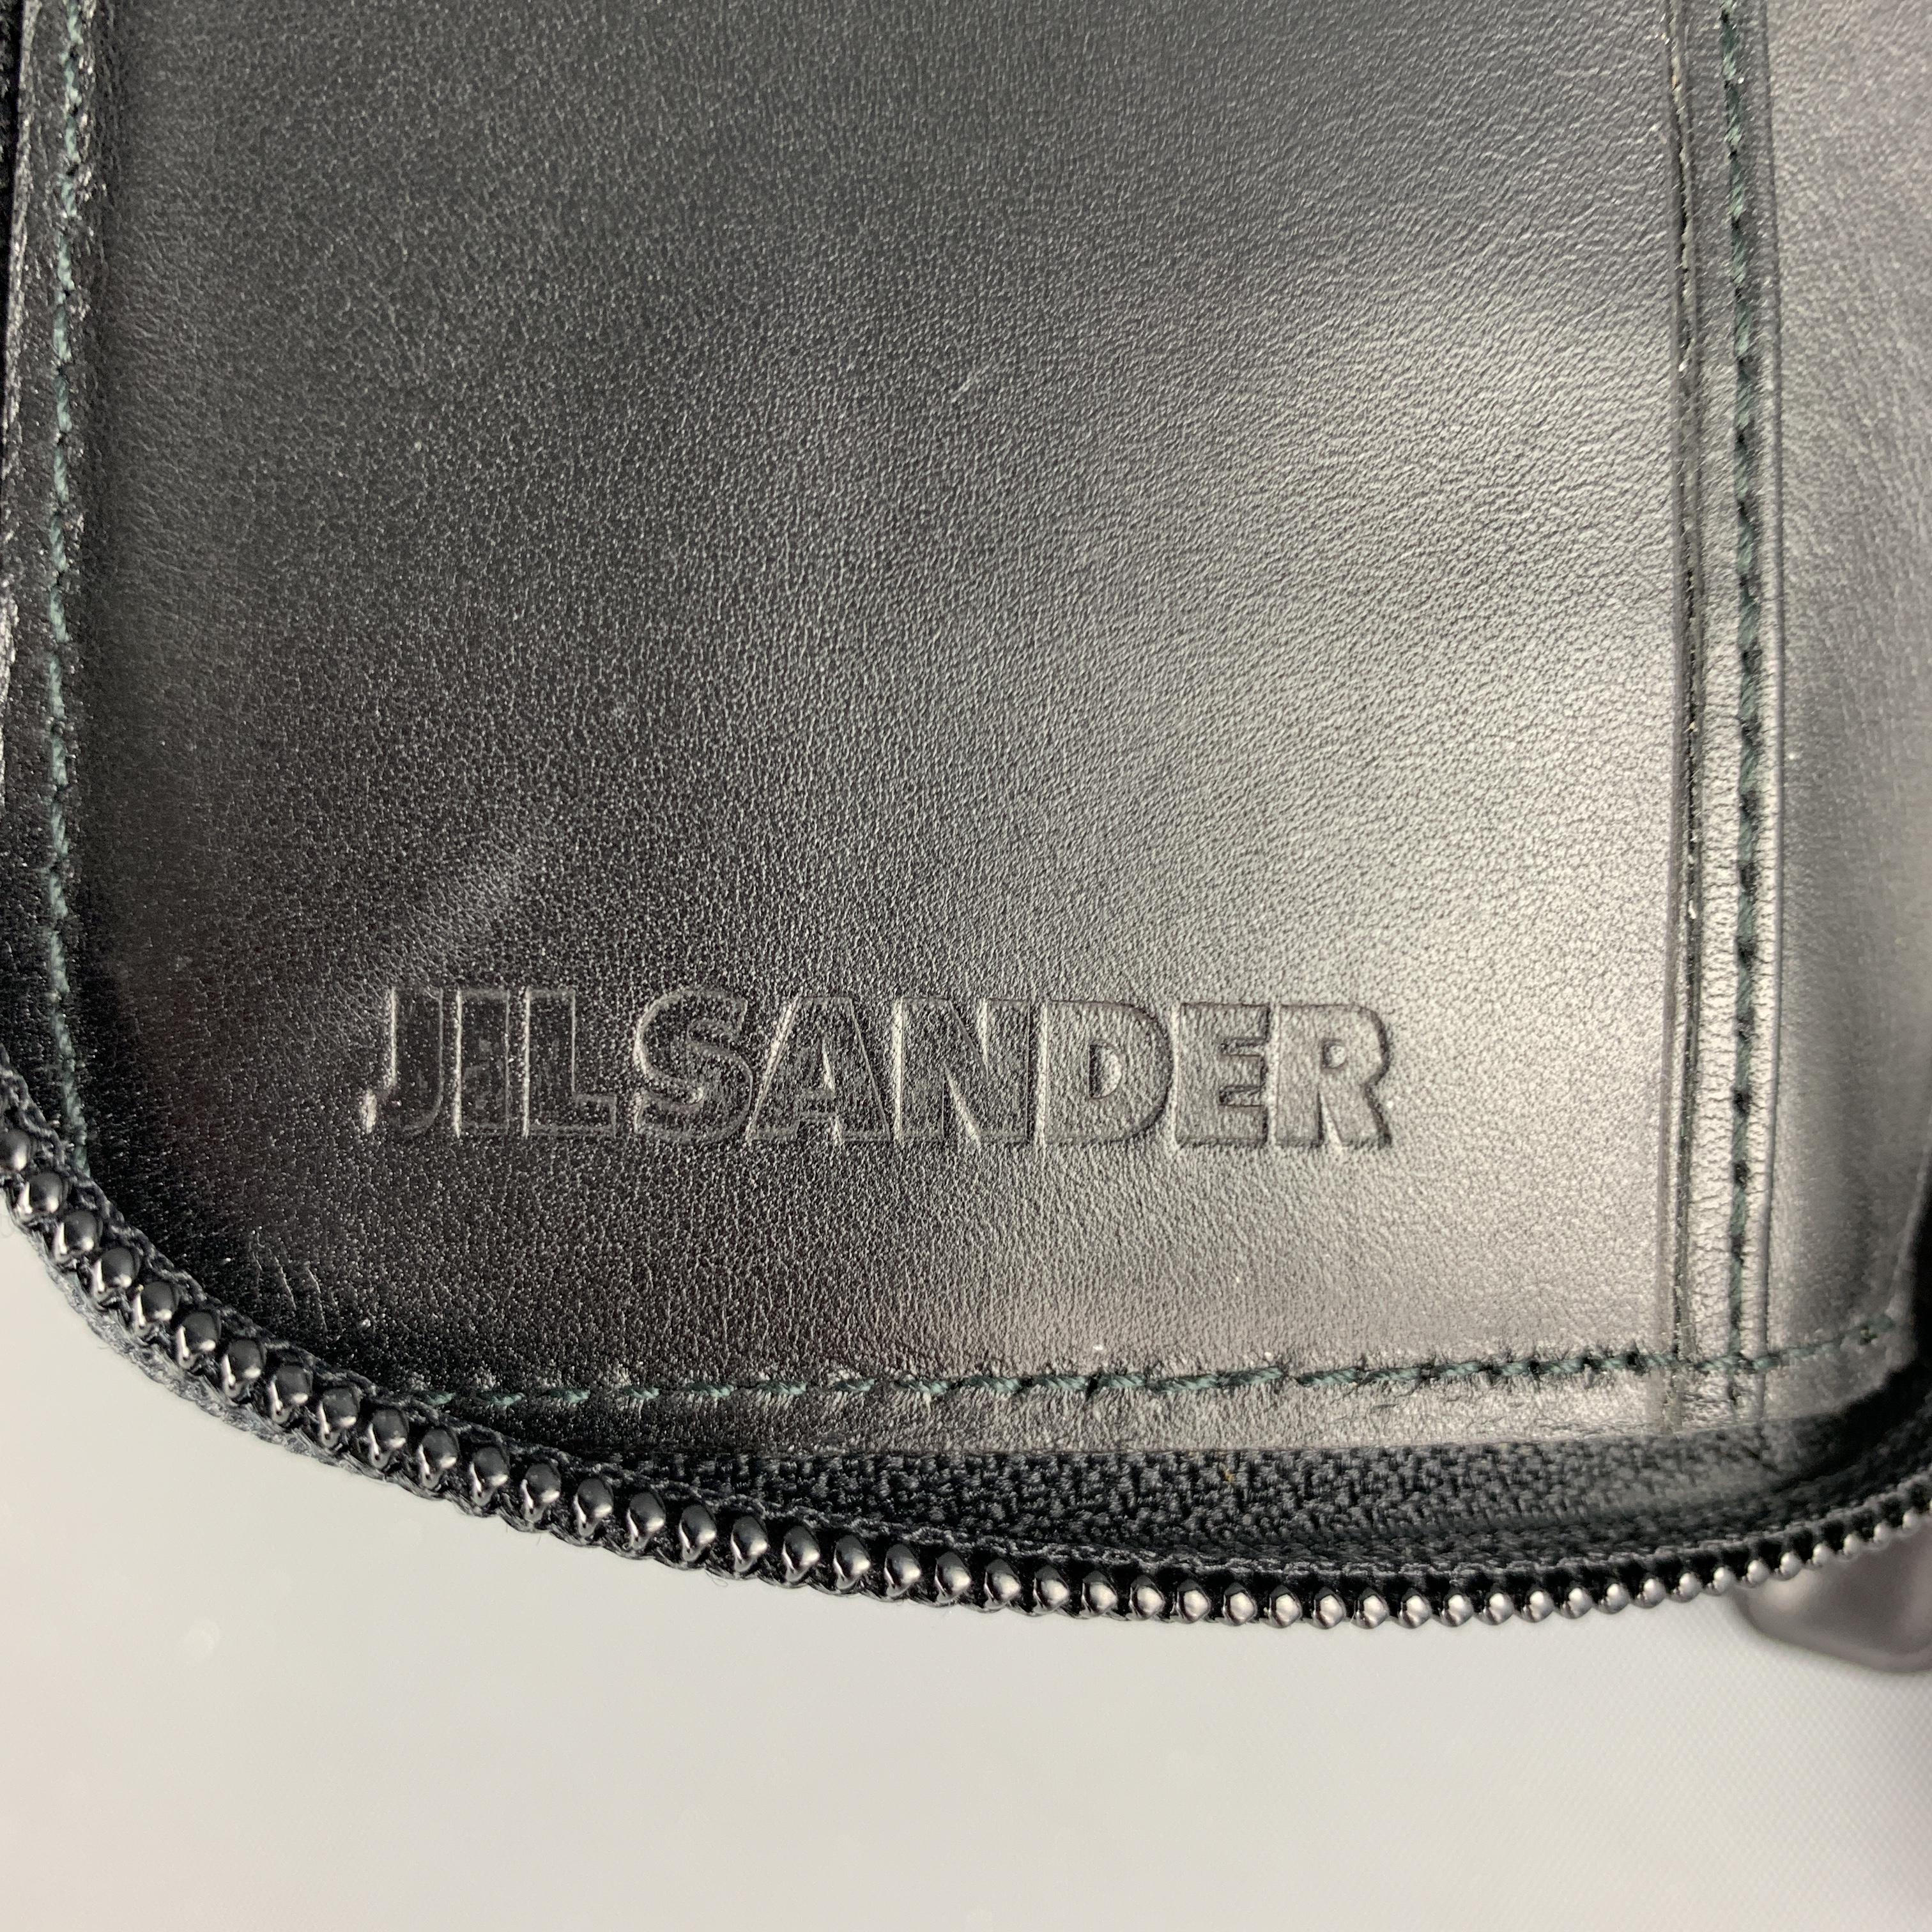 JIL SANDER Black Fabric Leather Wallet / Purse 3